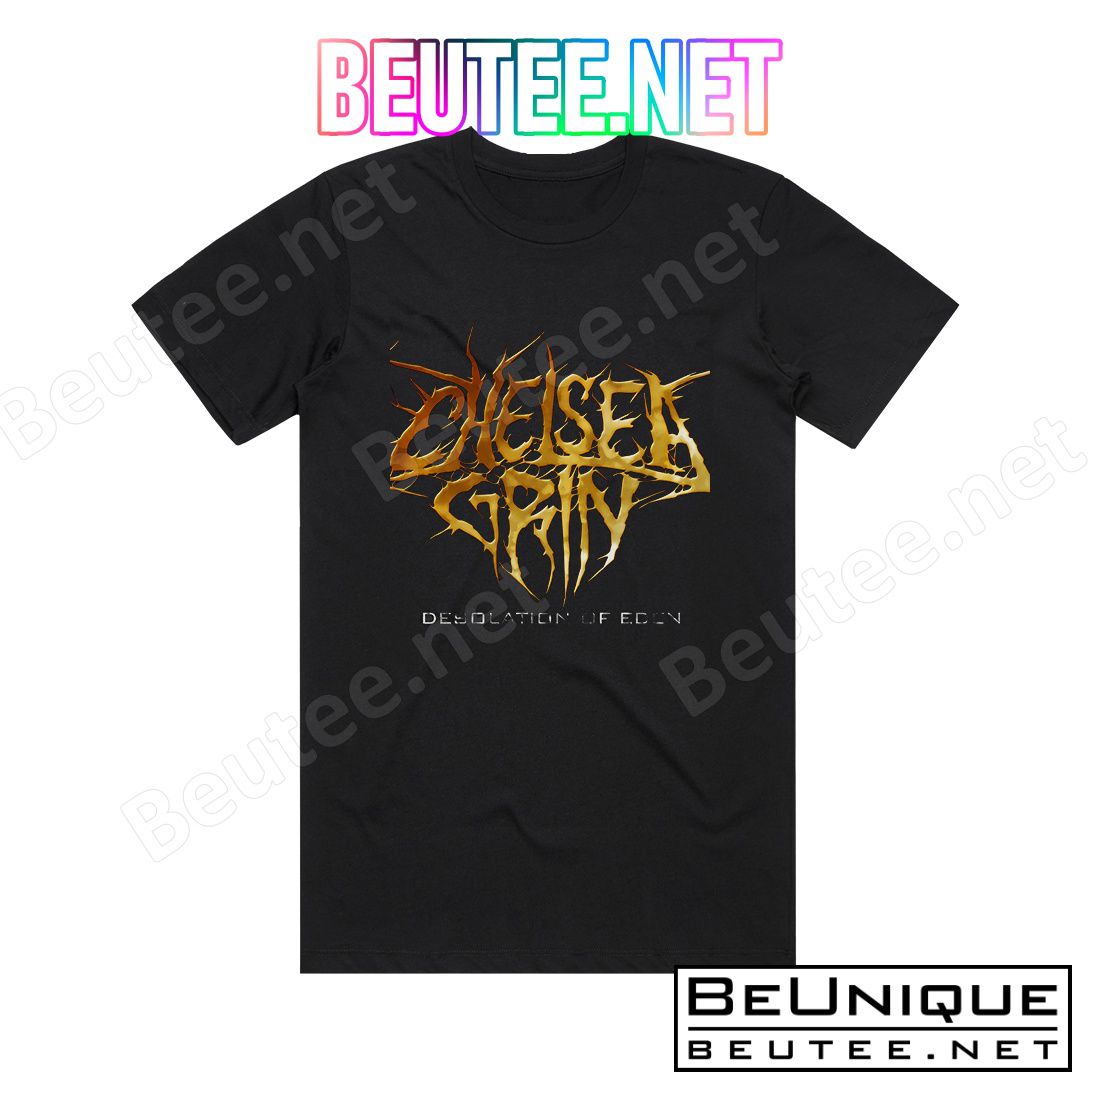 Chelsea Grin Desolation Of Eden 4 Album Cover T-Shirt